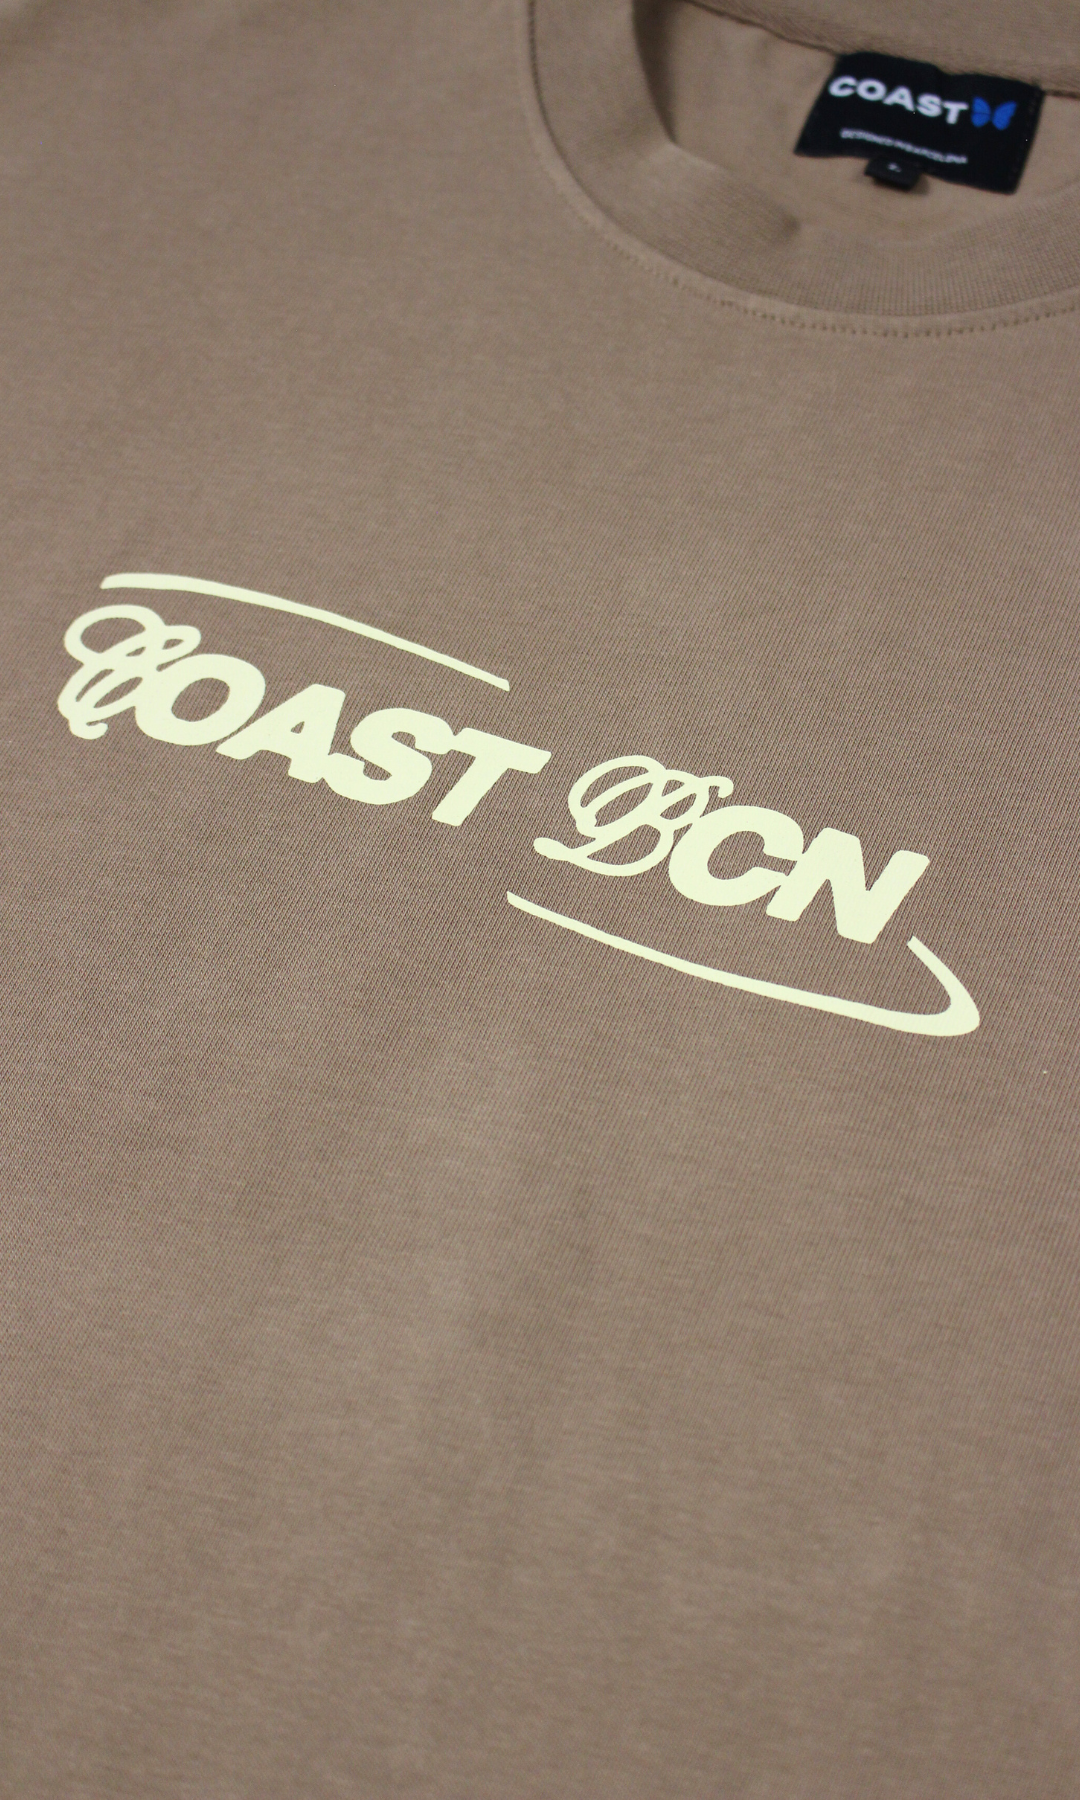 Sunrise T-shirt CoastBcn